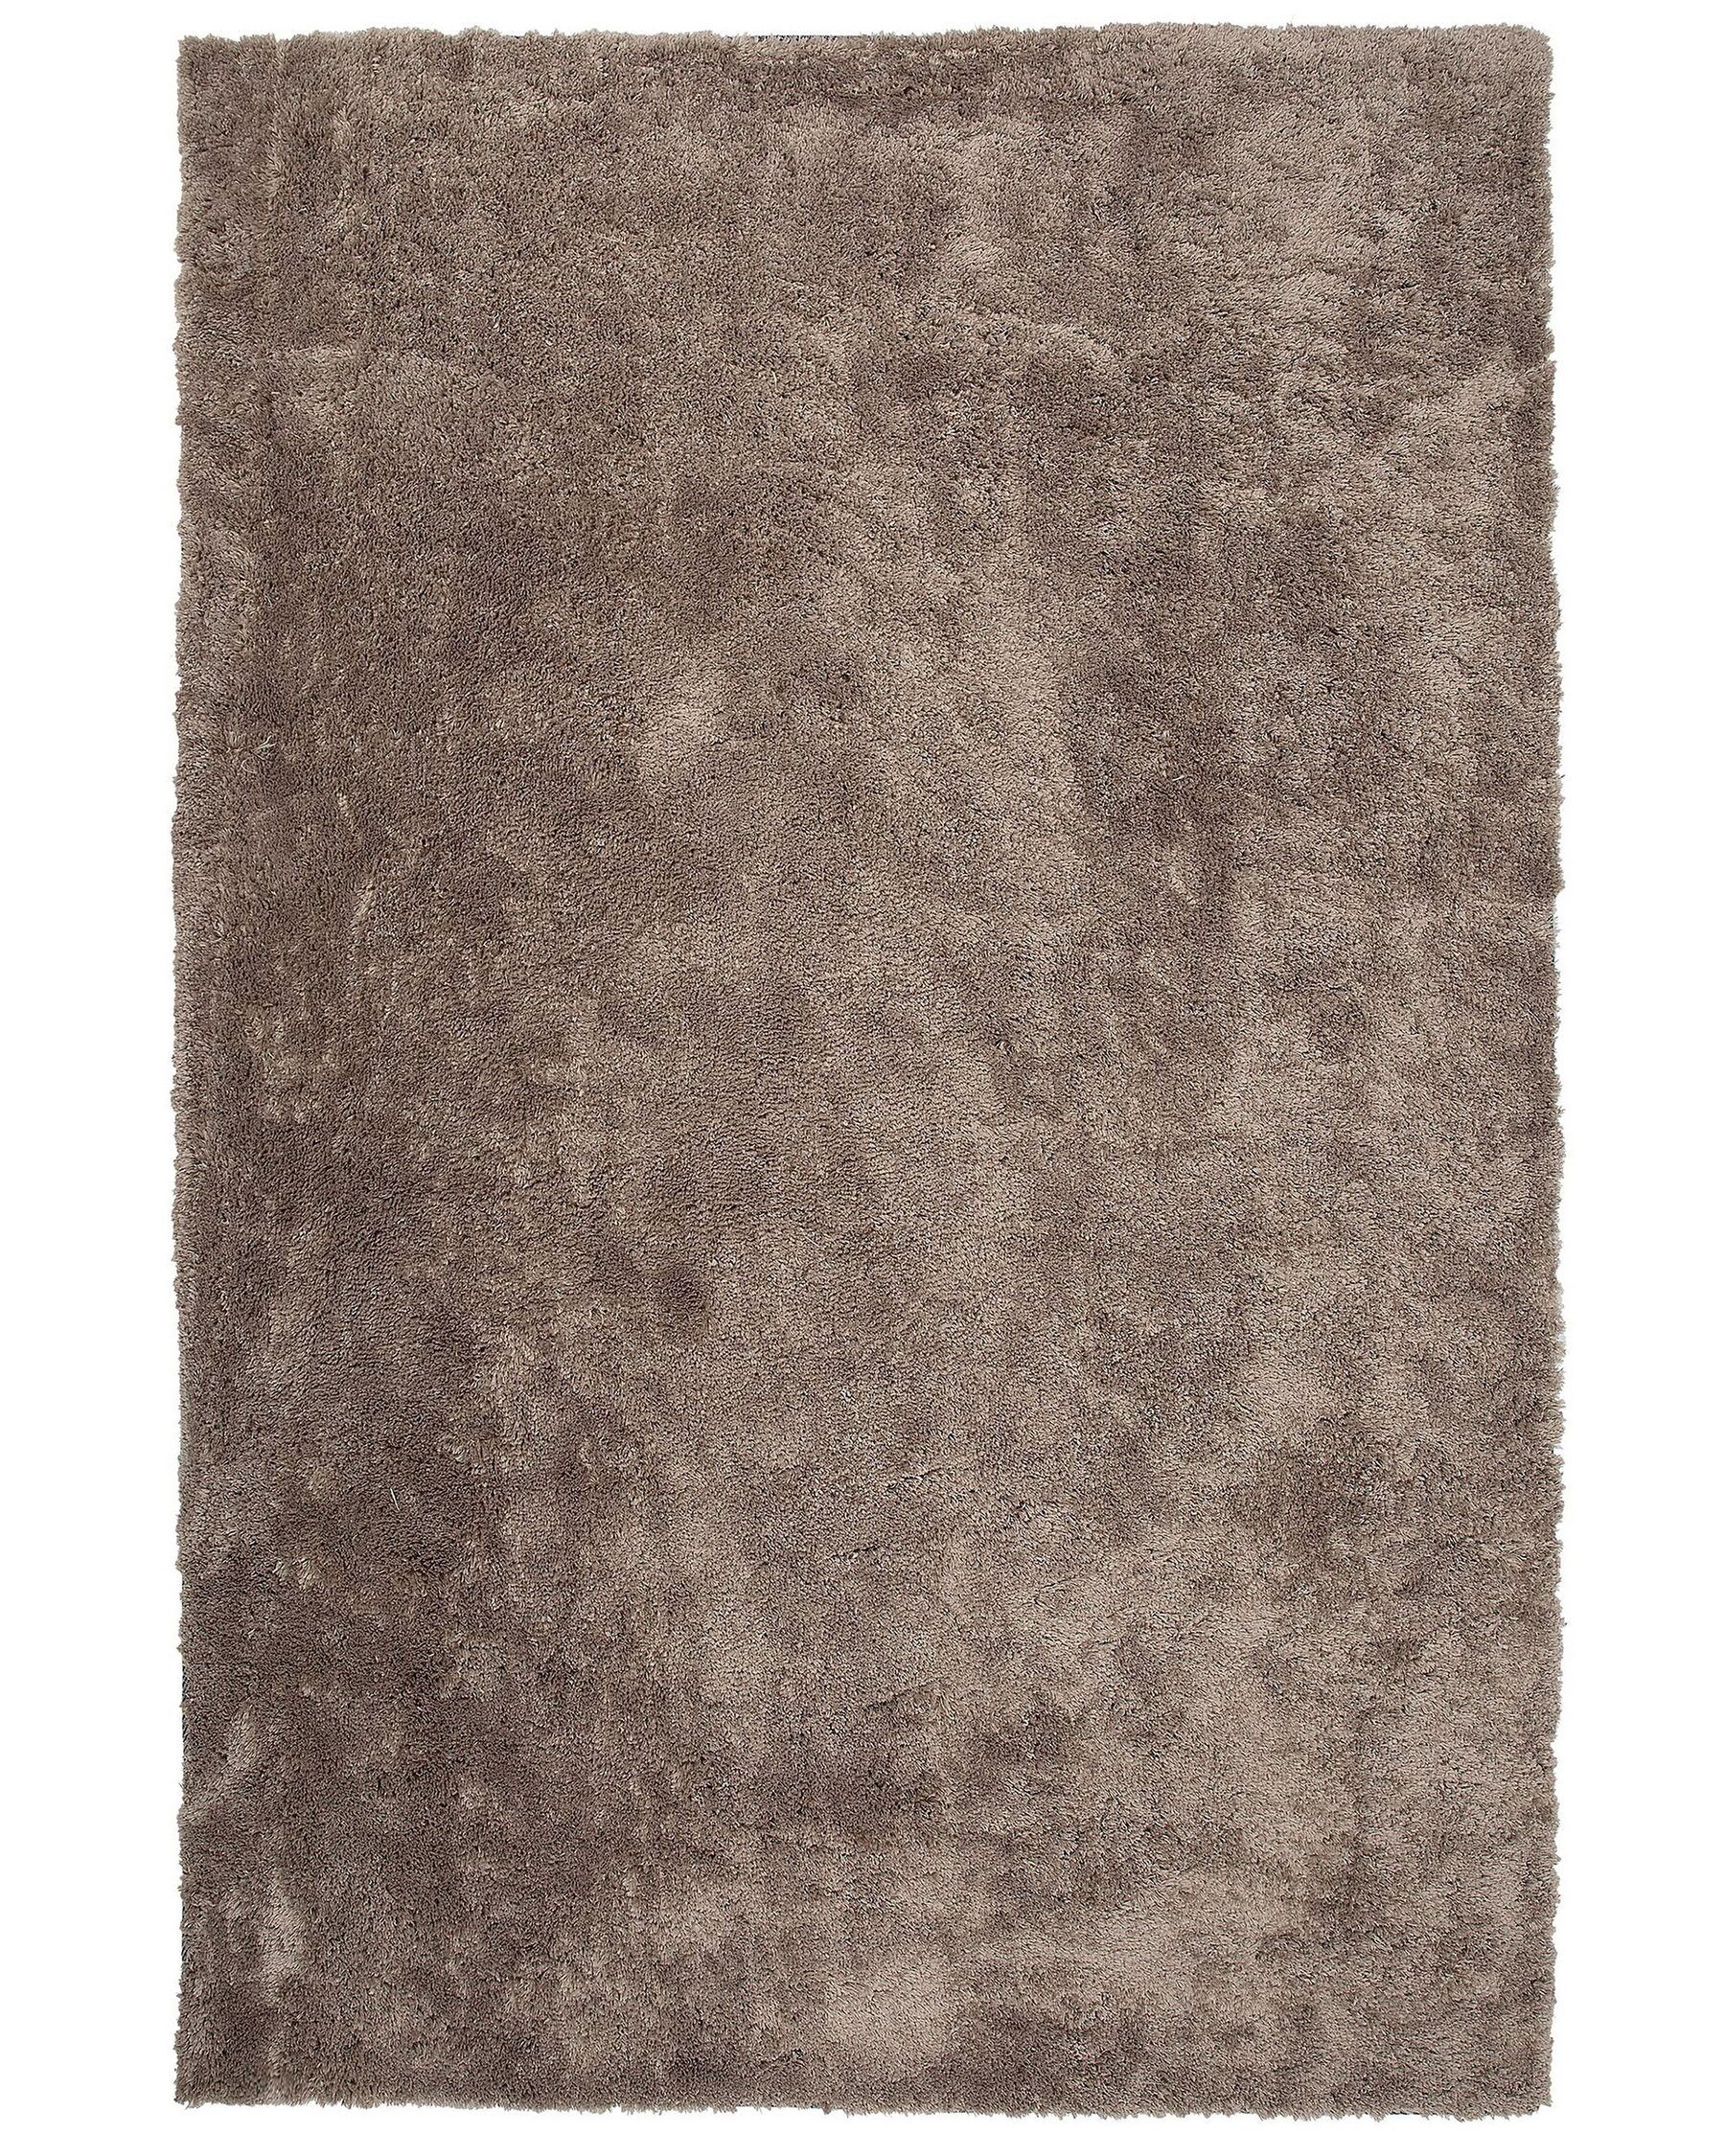 Tappeto shaggy marrone chiaro 140 x 200 cm EVREN_758565